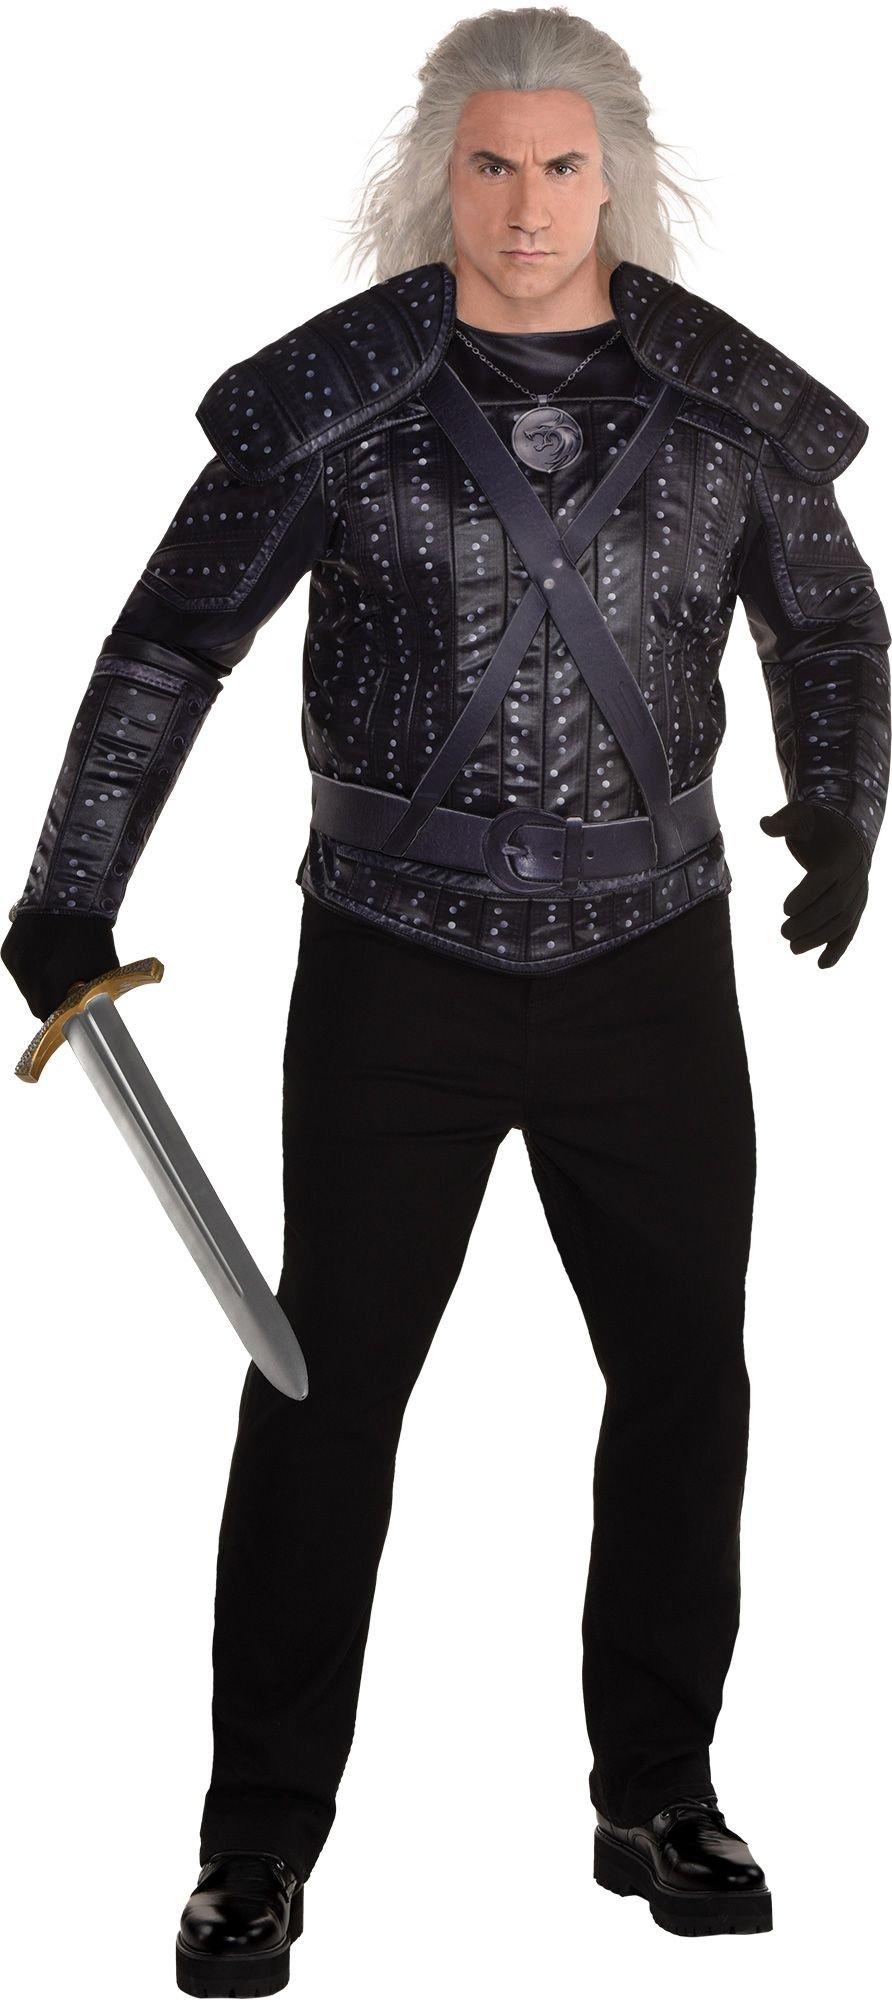 Adult Geralt of Rivia Plus Size Costume - Netflix Witcher | Party City